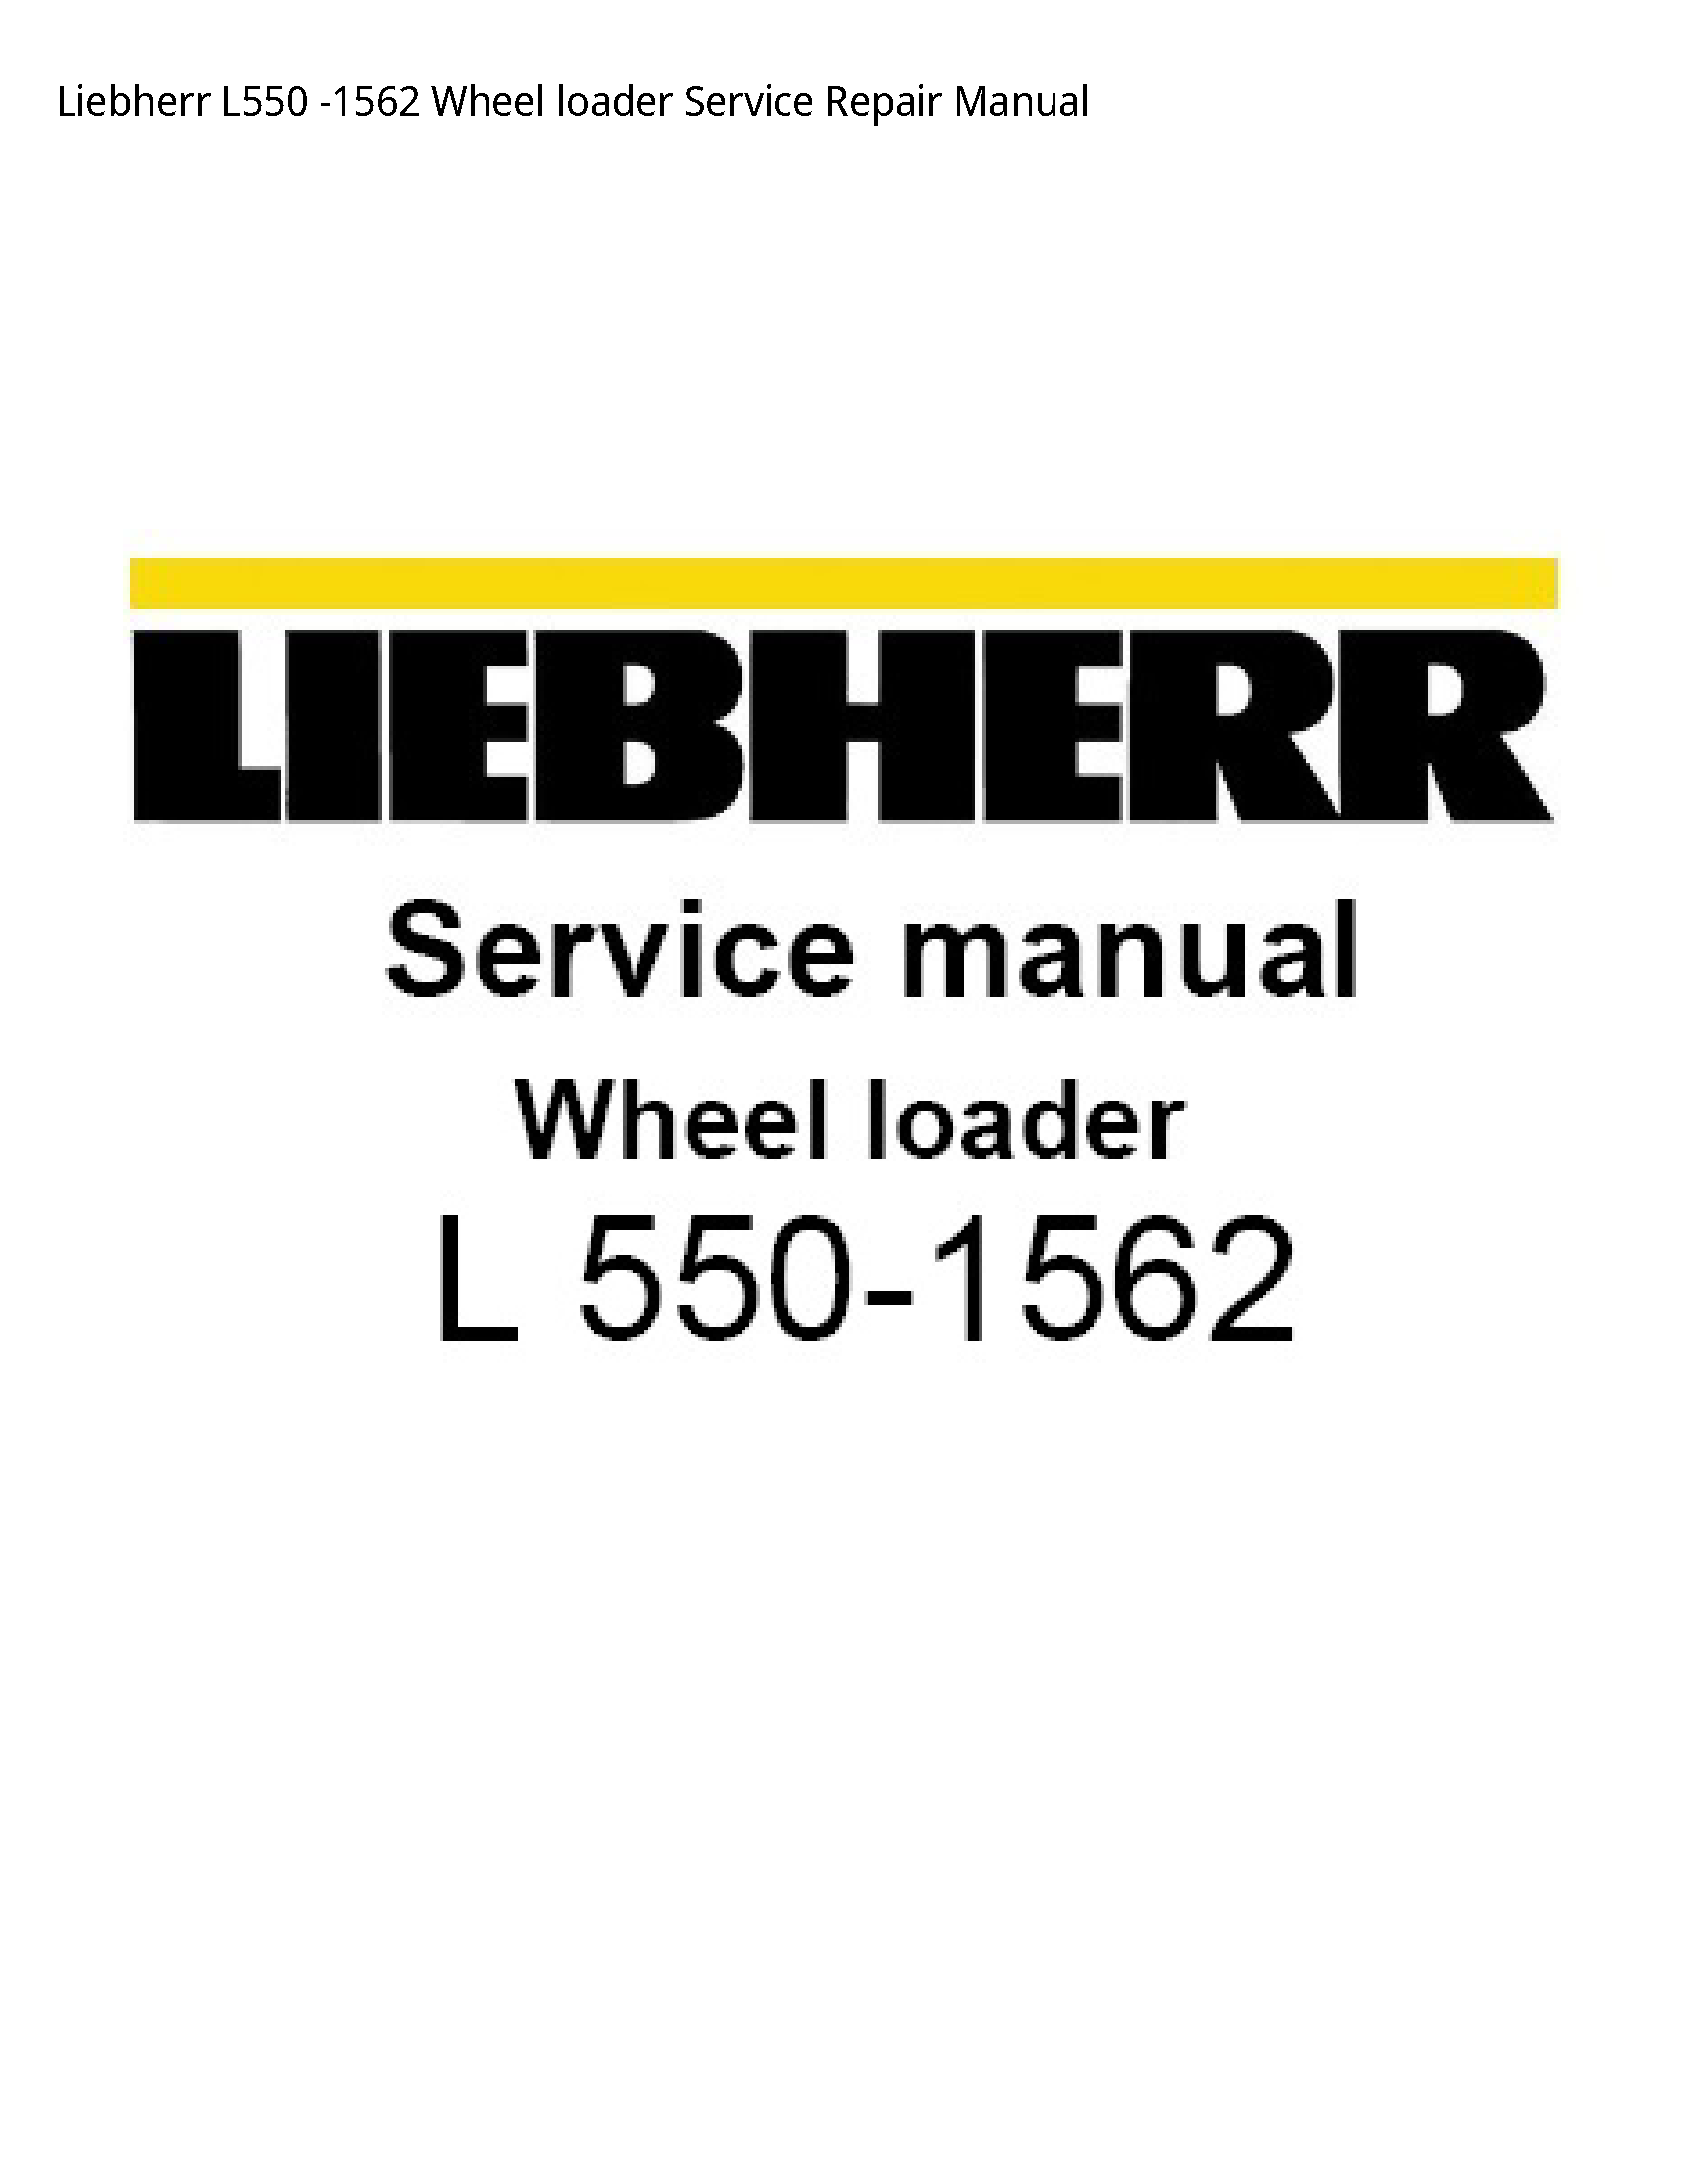 Liebherr L550 Wheel loader manual